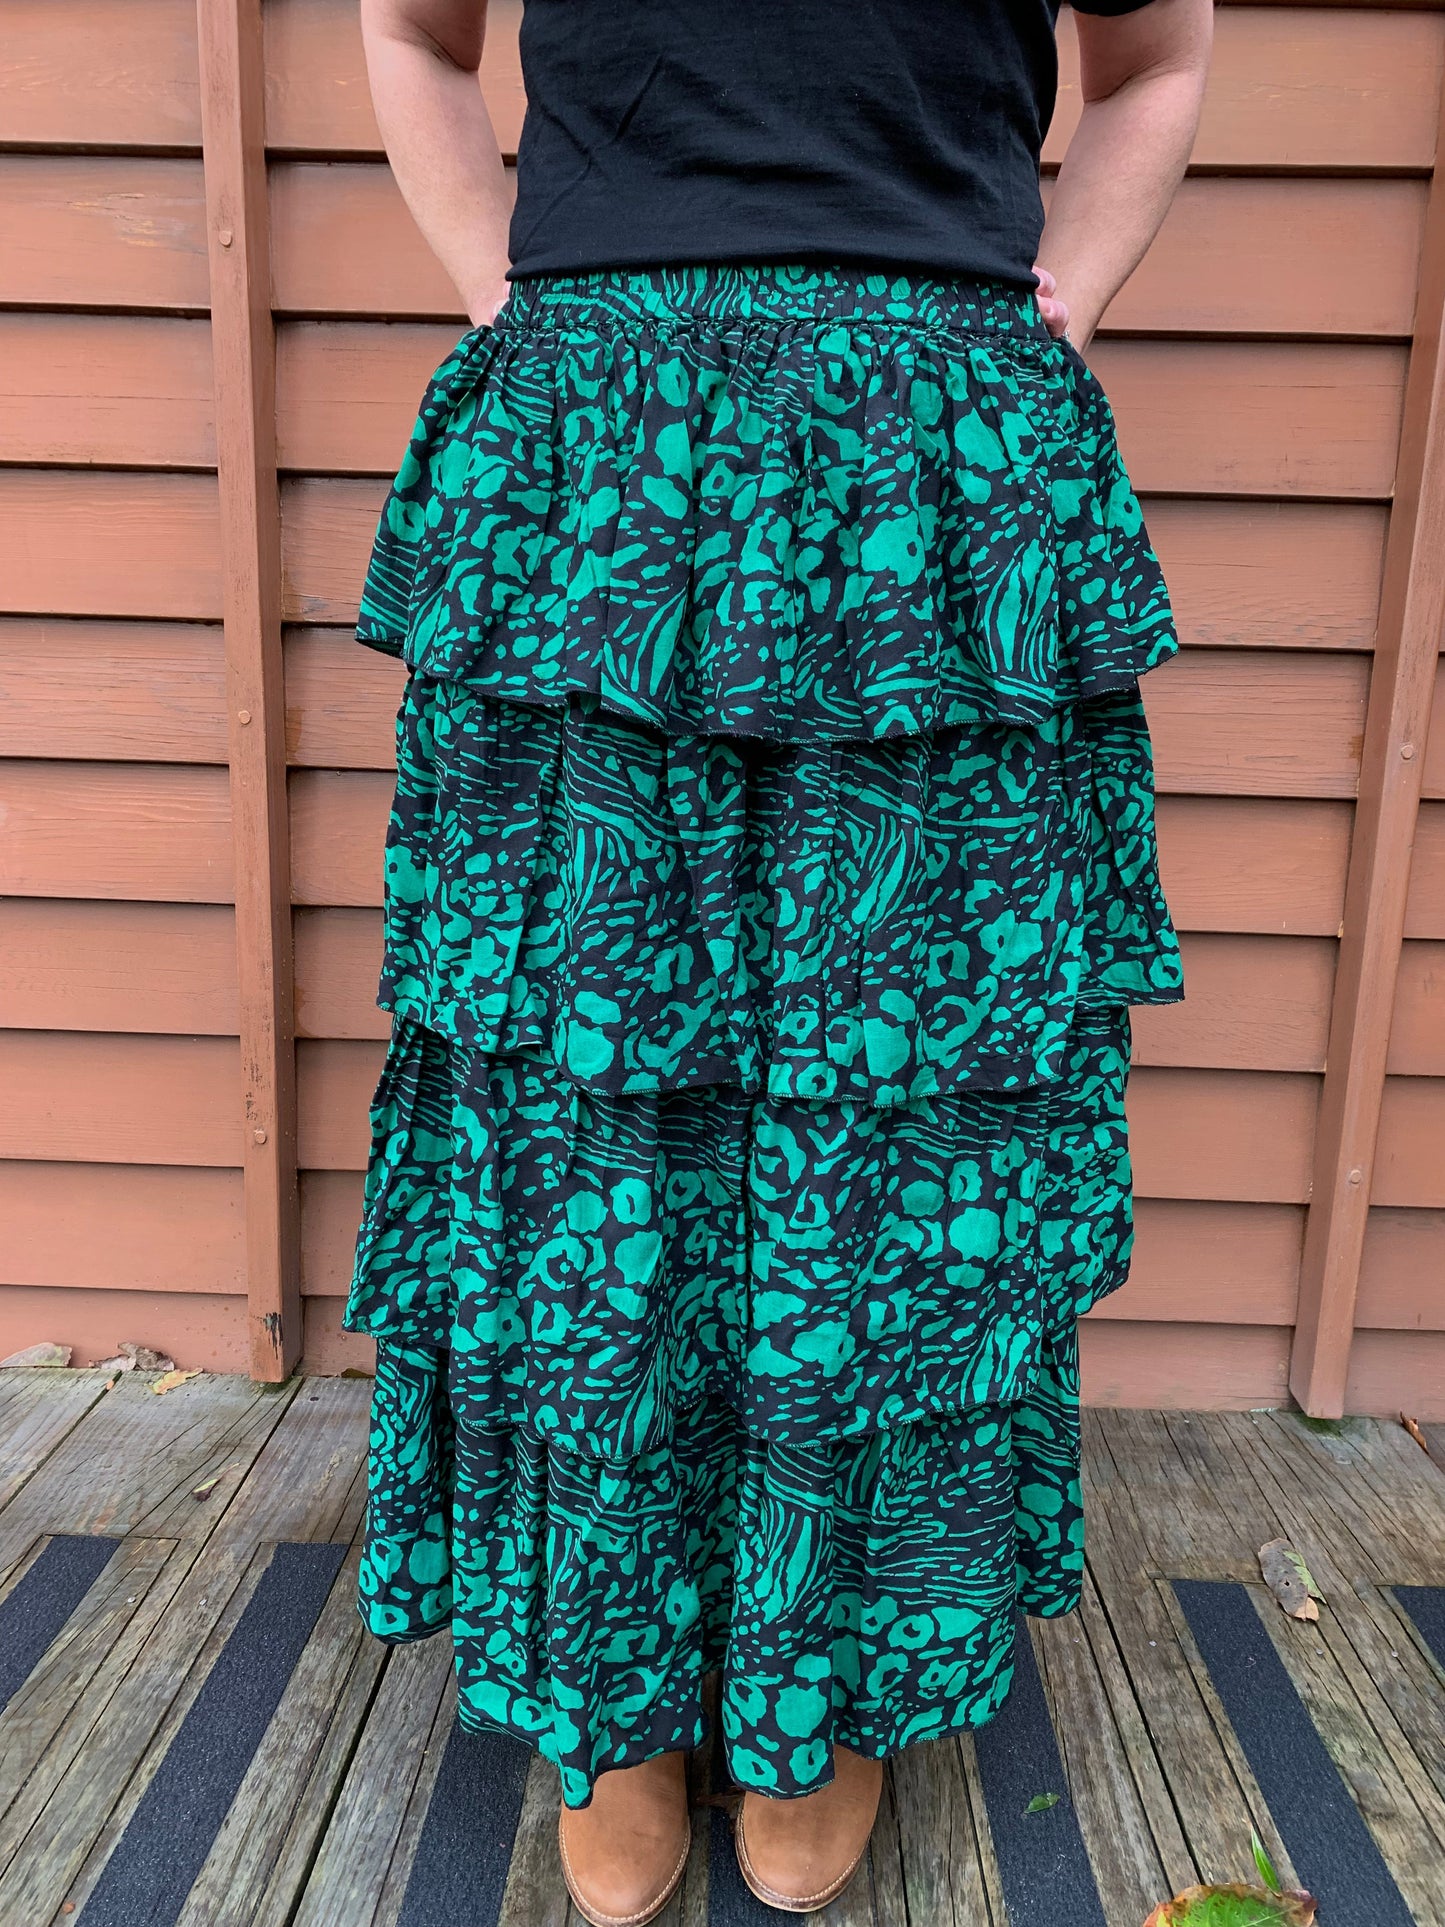 Kelly Ruffle Skirt Animal Print - Jazz & Milly Clothing#New_ Zealand#